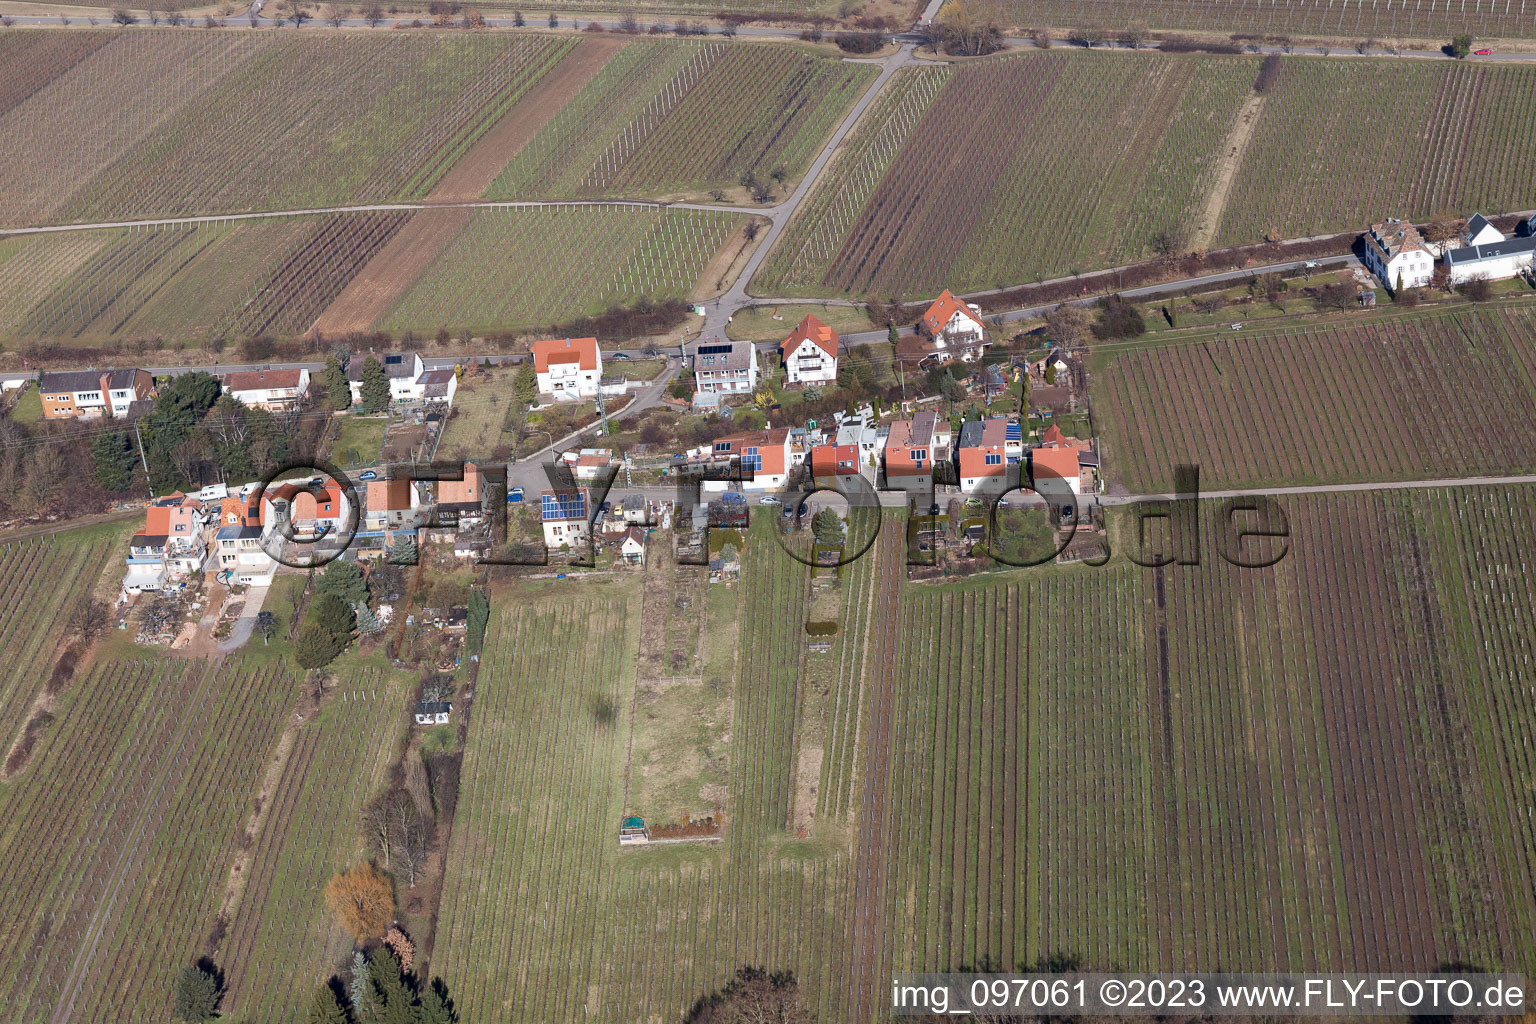 Klosterstrasse settlement in Edenkoben in the state Rhineland-Palatinate, Germany